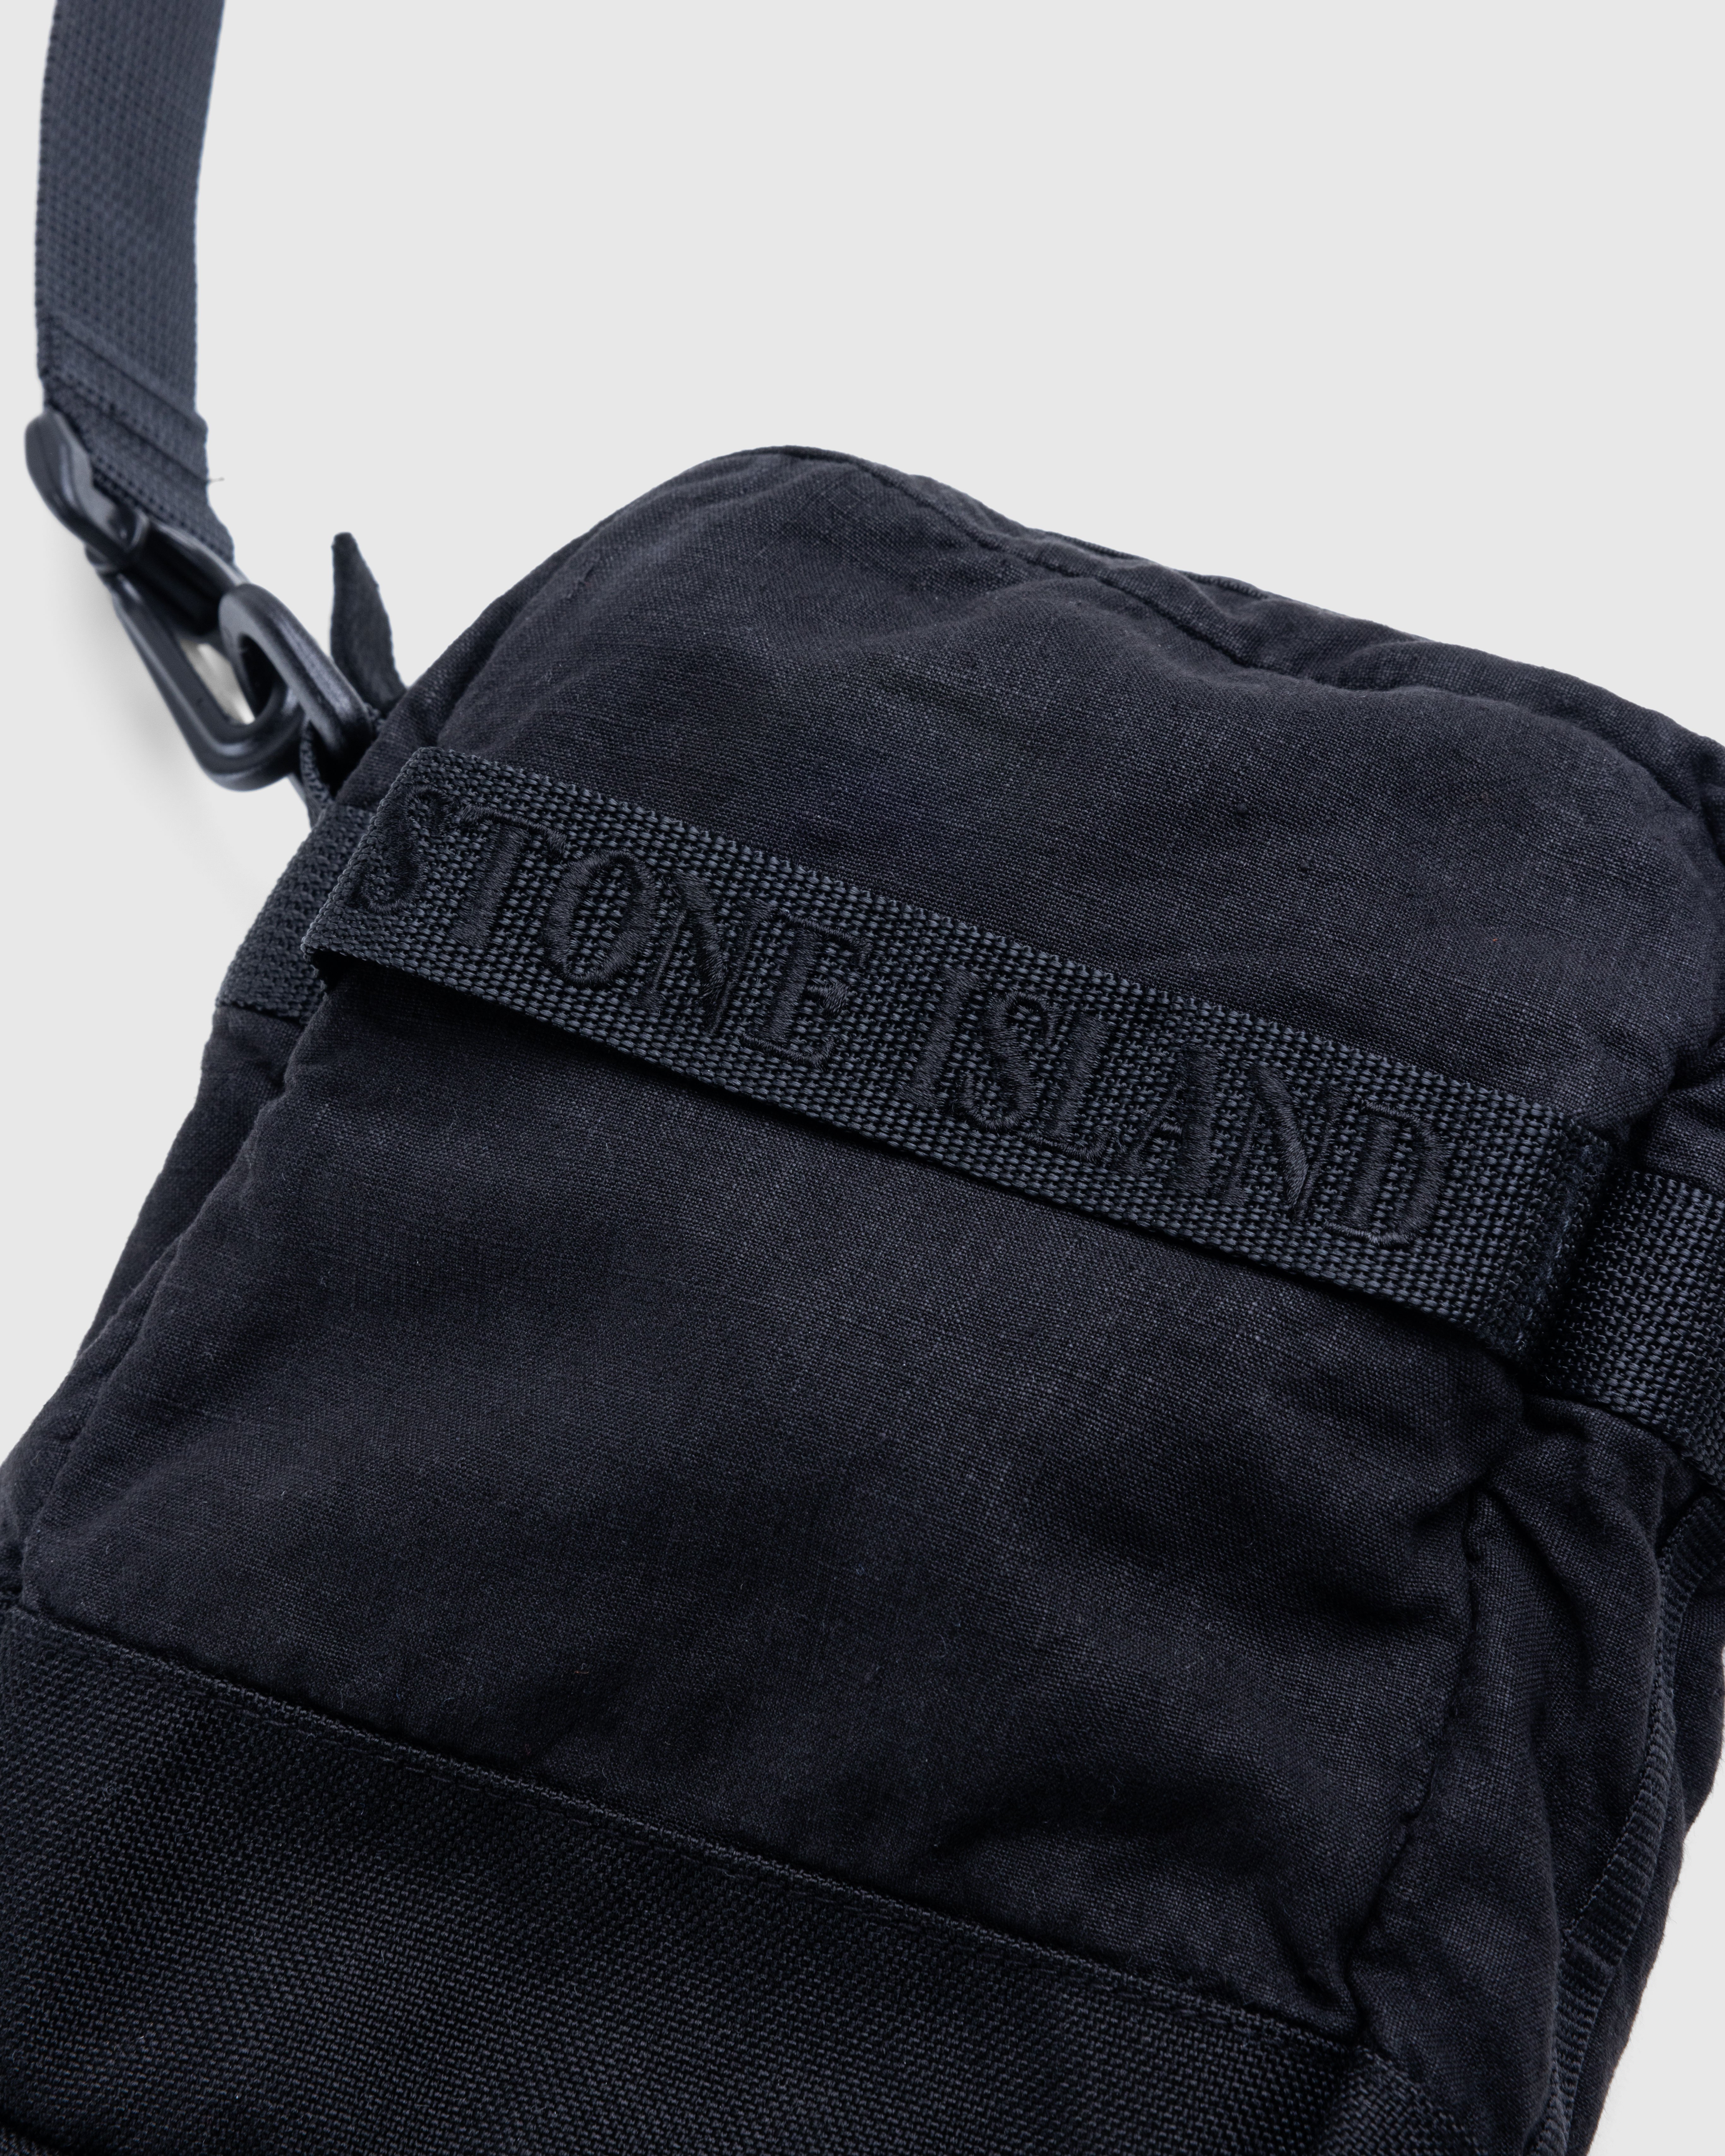 Stone Island - BUMBAG BLACK - Accessories - Black - Image 4